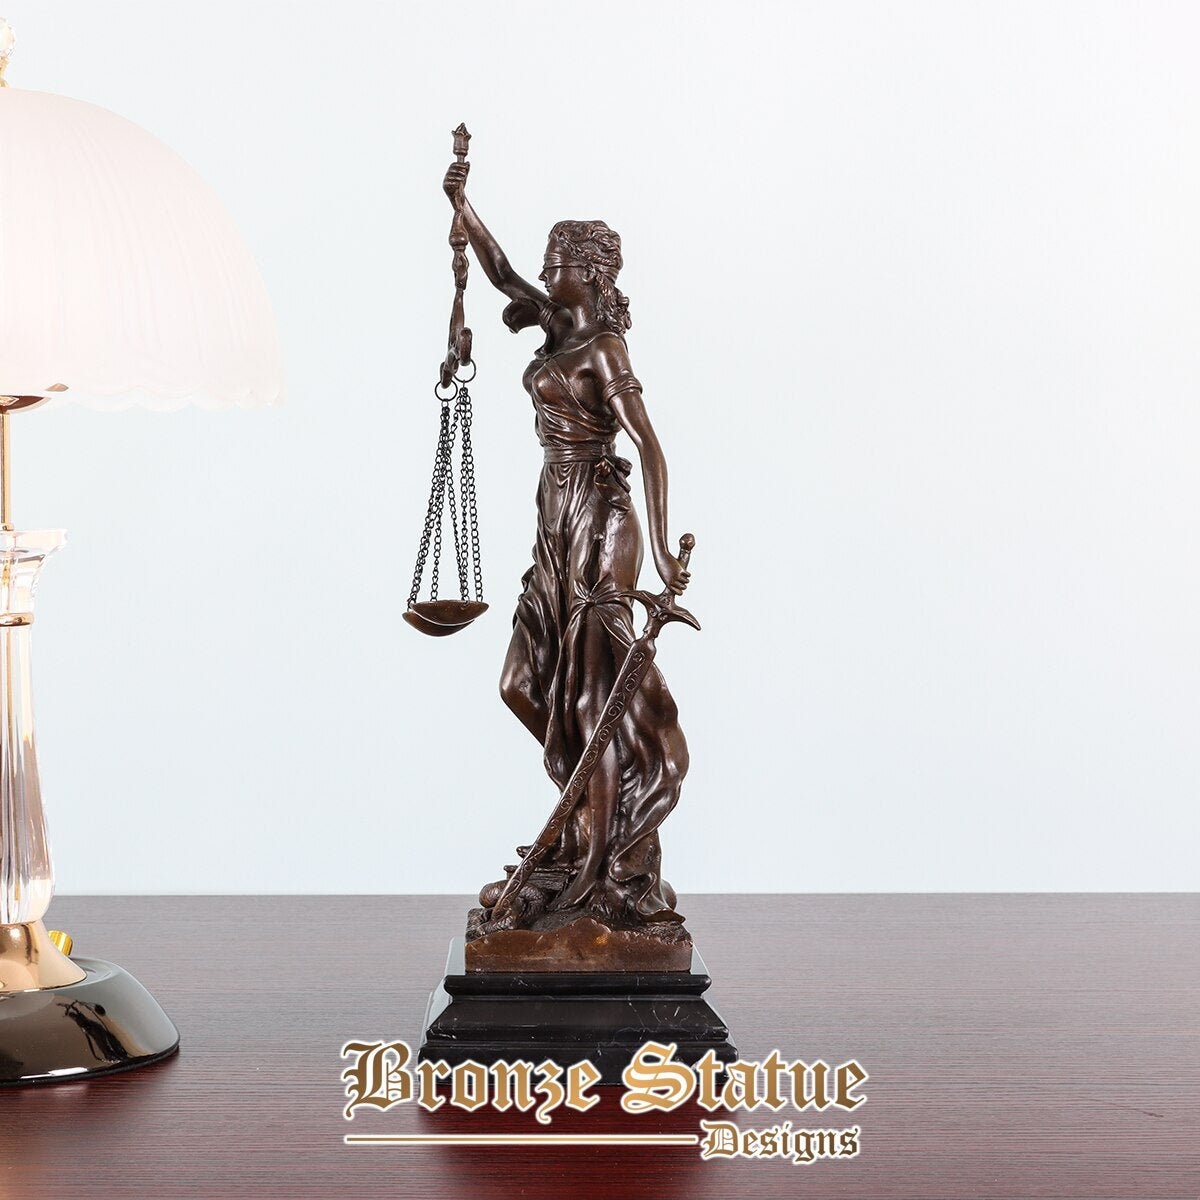 Lady justice greek goddess statue bronze blind themis justitia sculpture mythology figurine antique art home decoration